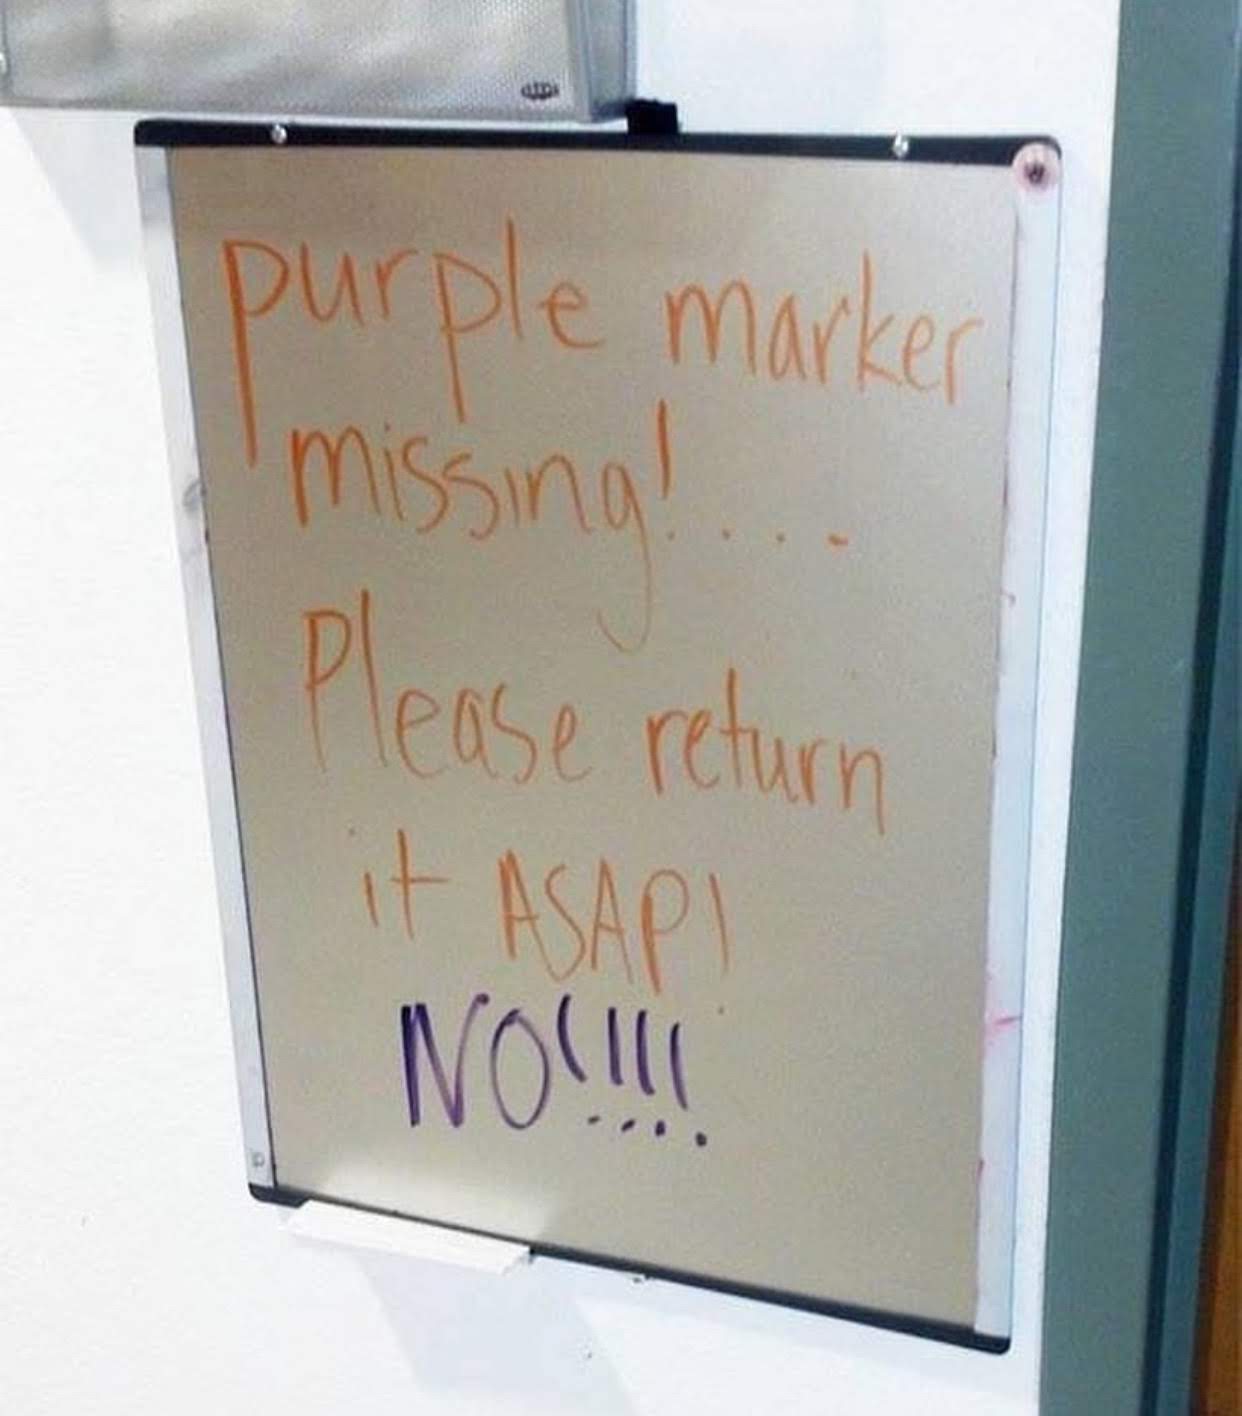 best responses to public notices - purple marker I missing! Please return it Asap! No!!!!